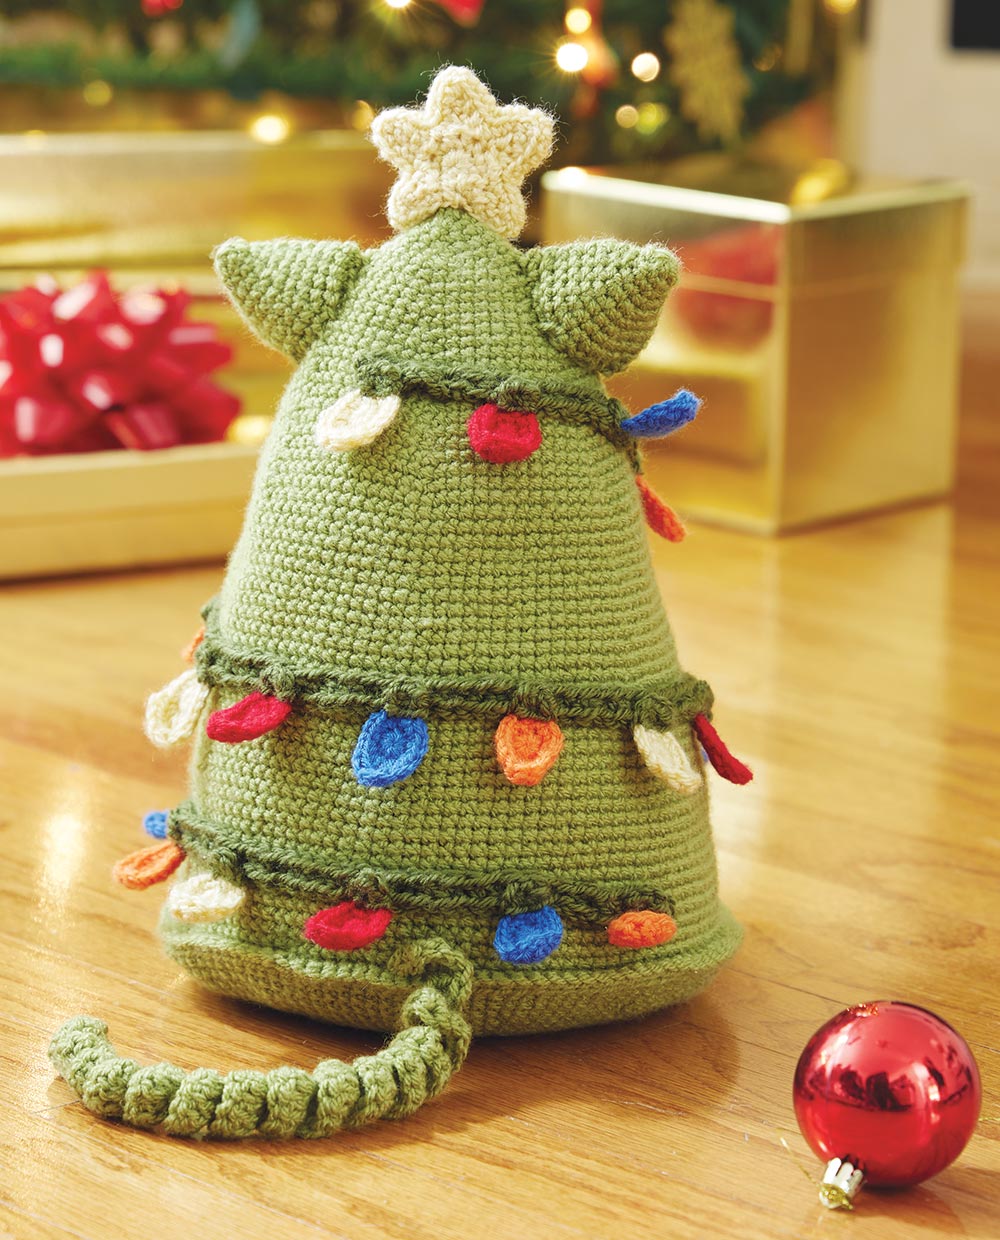 DIY Amigurumi Crochet Kit Christmas Tree / Craft Project / 